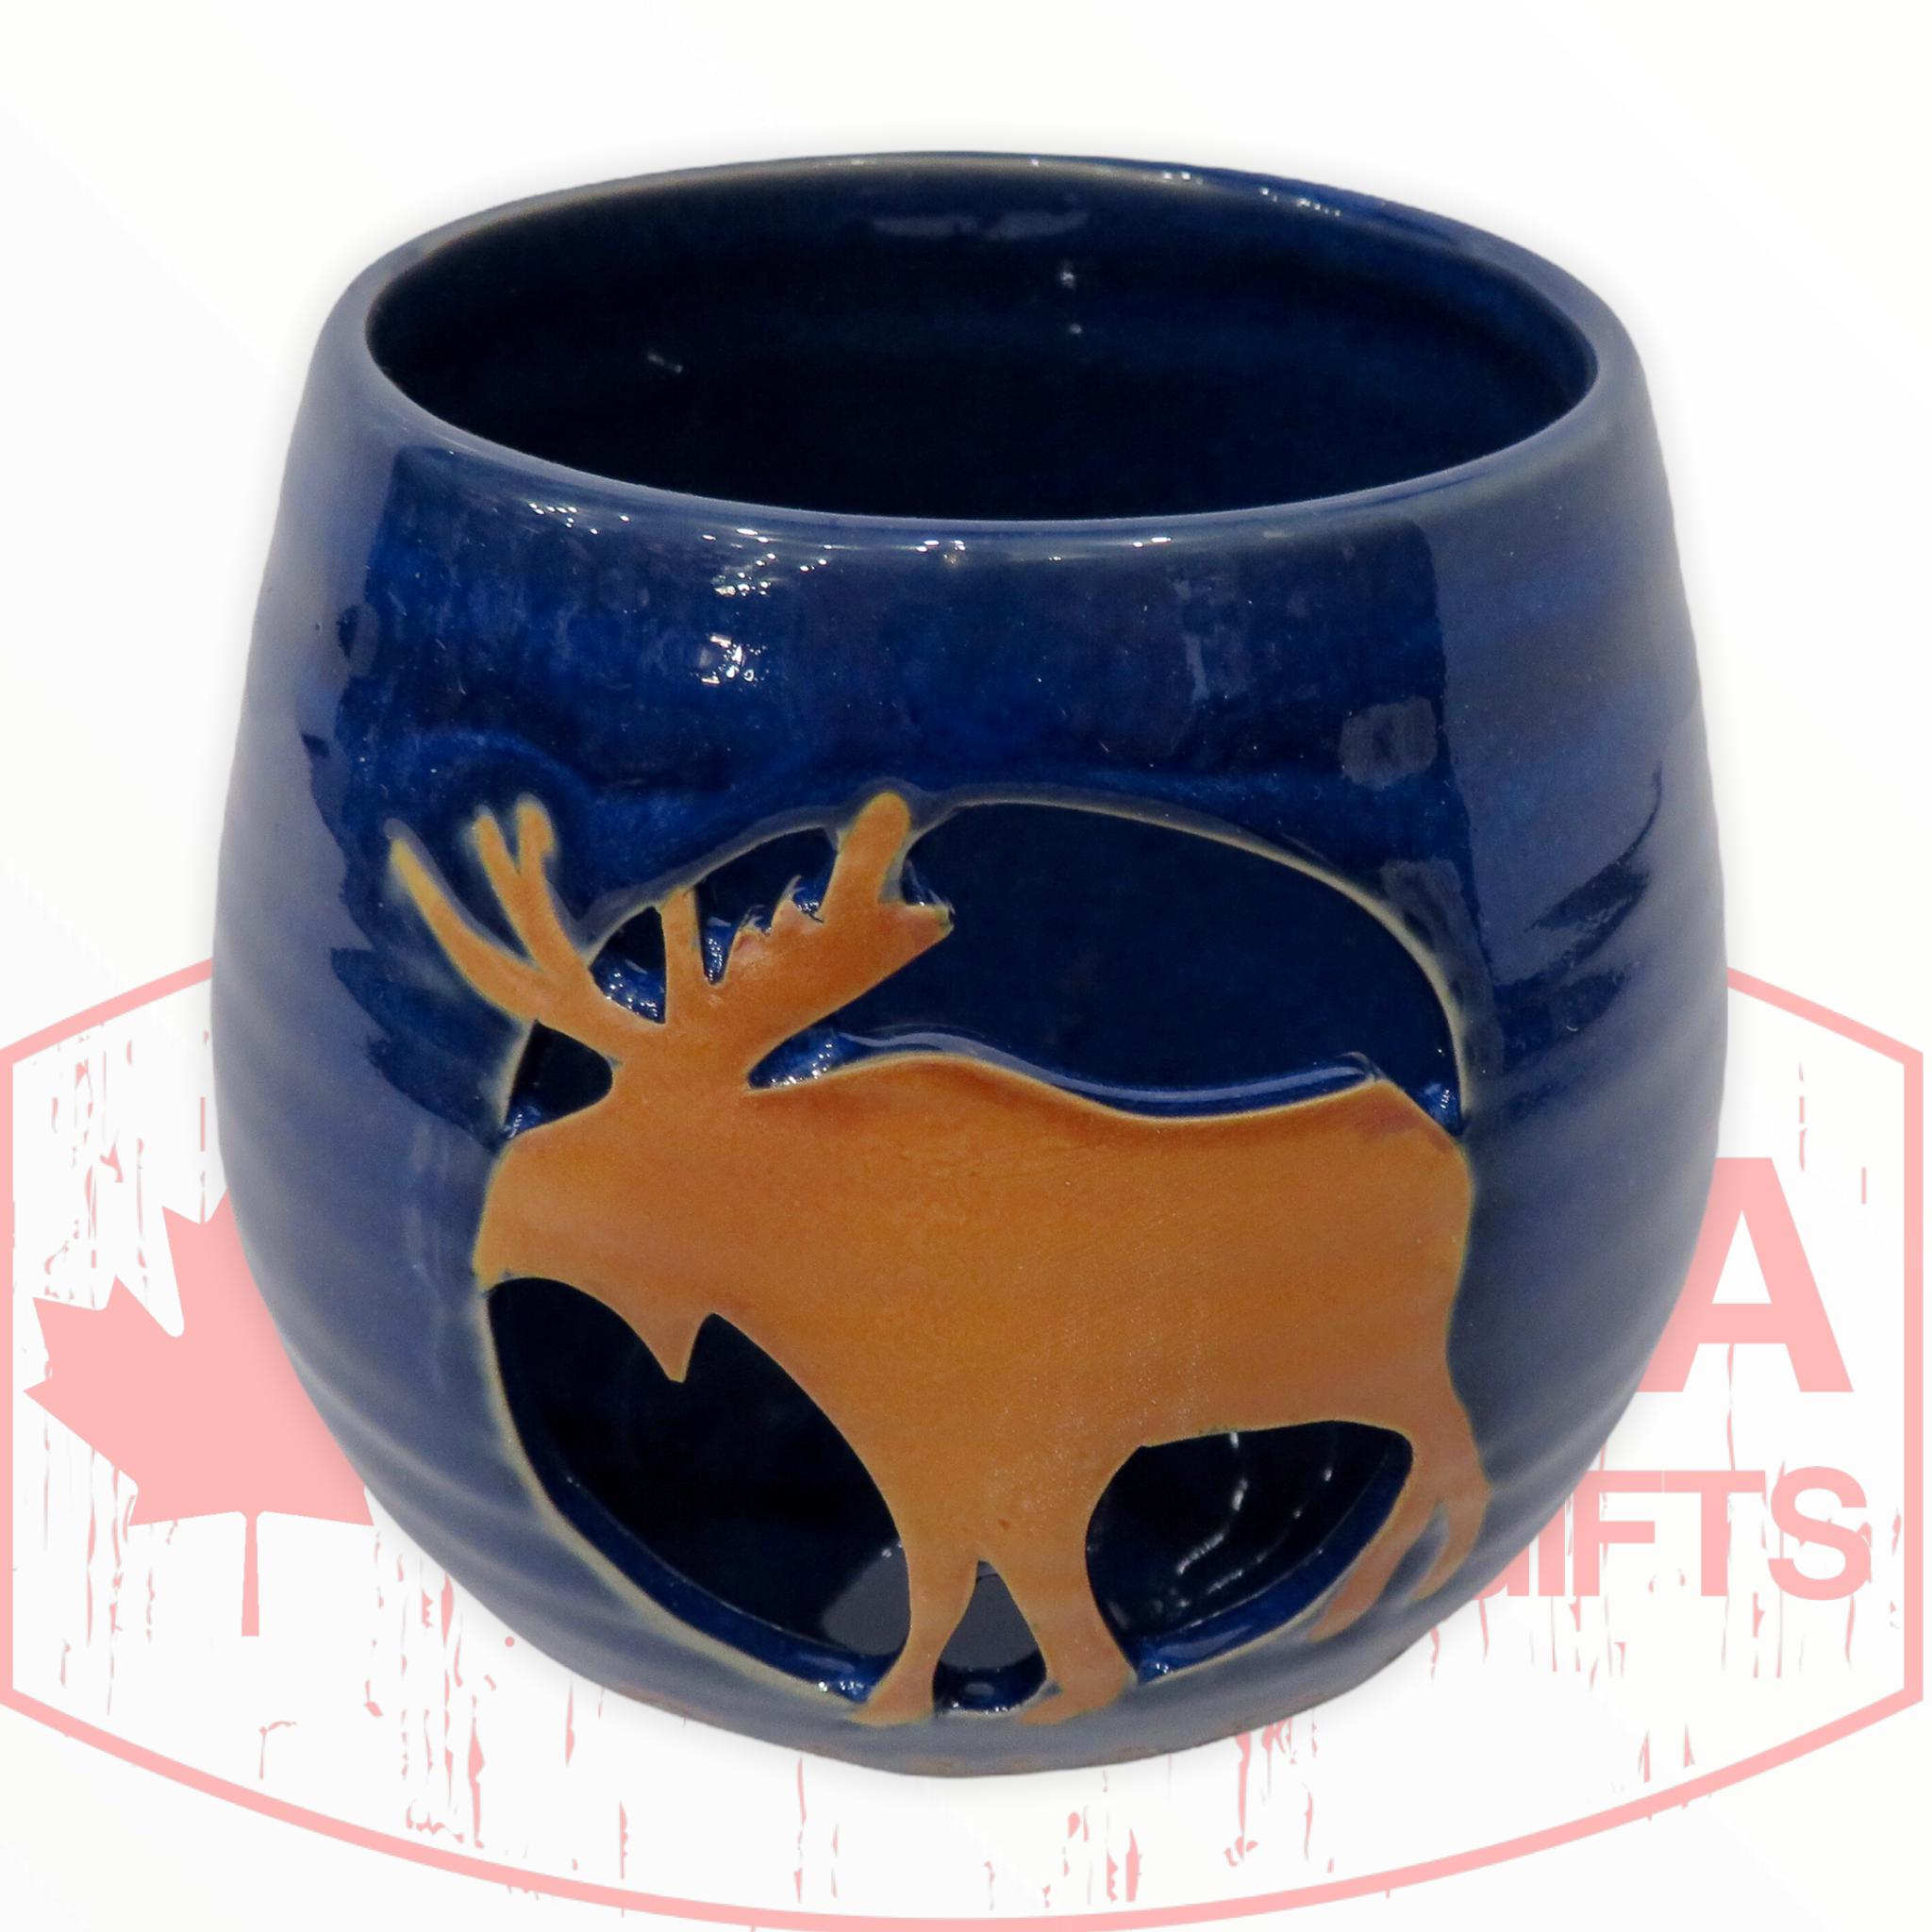 Canada Moose Bowl Shaped Ceramic Candle Holder - Tea Light Candle Holder Jar 22 oz